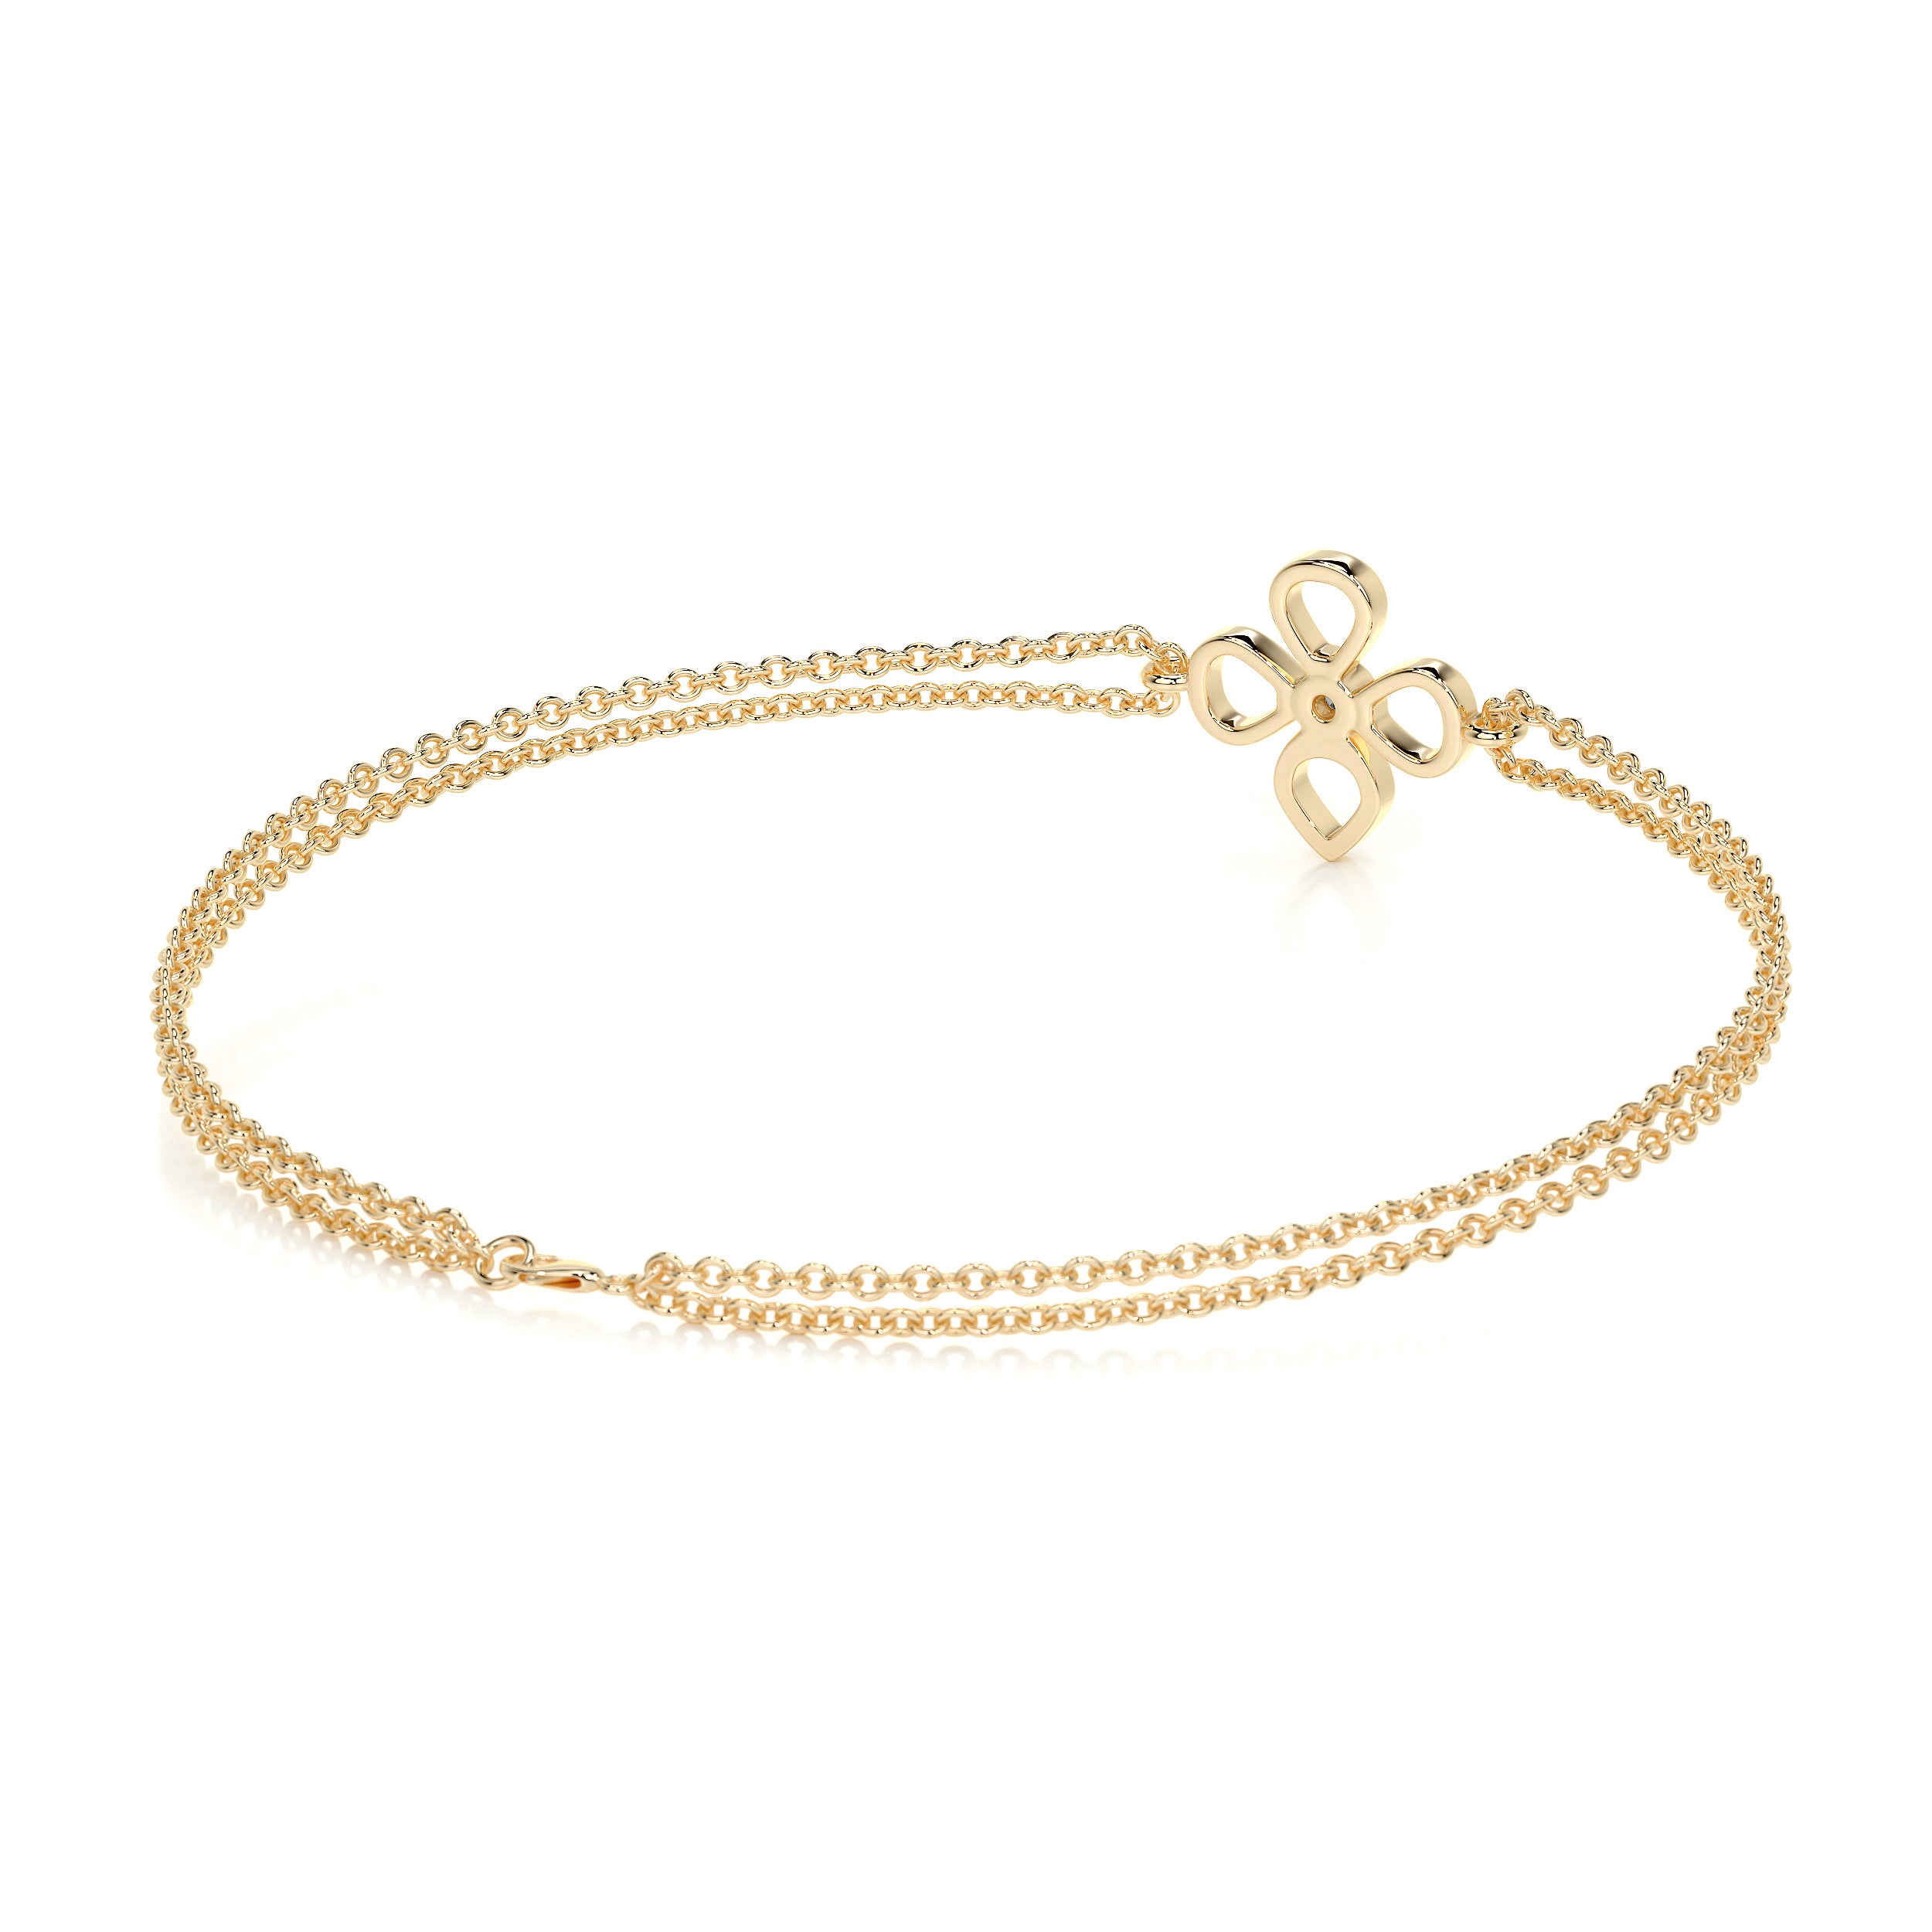 Dolores Diamonds Bracelet   (0.02 Carat) -18K Yellow Gold